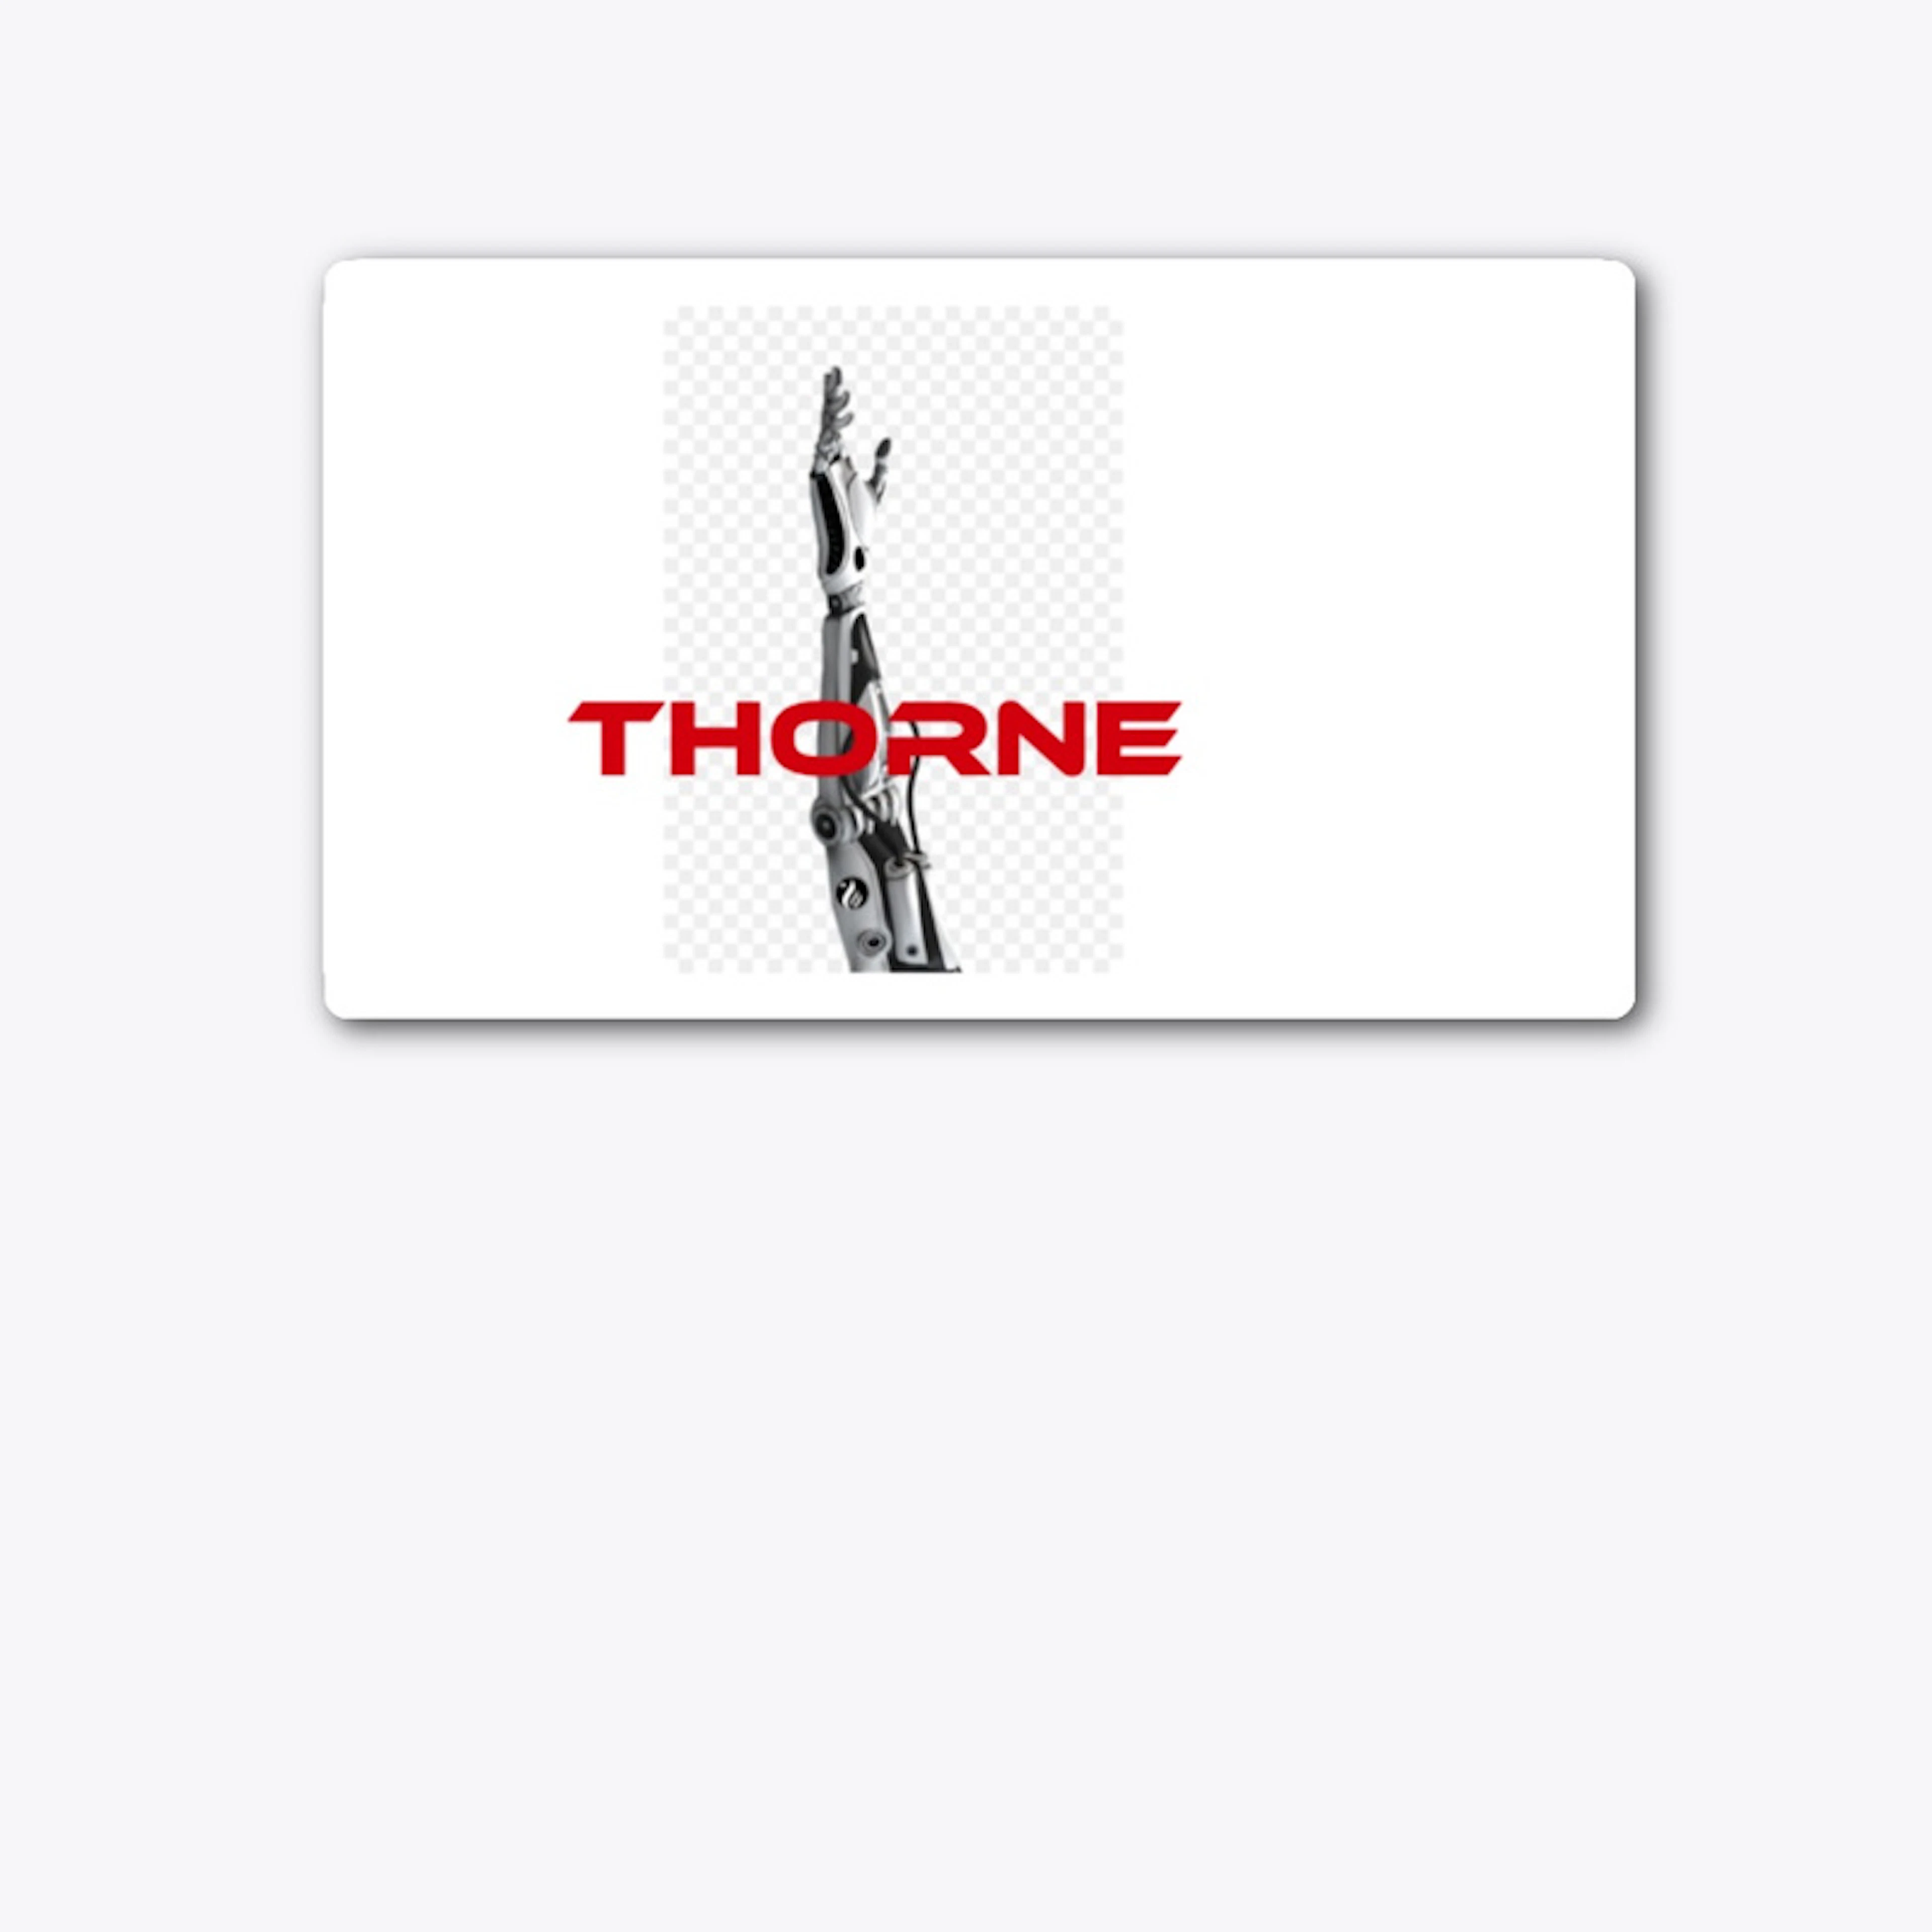 Thorne Long robotic arm 1 sticker